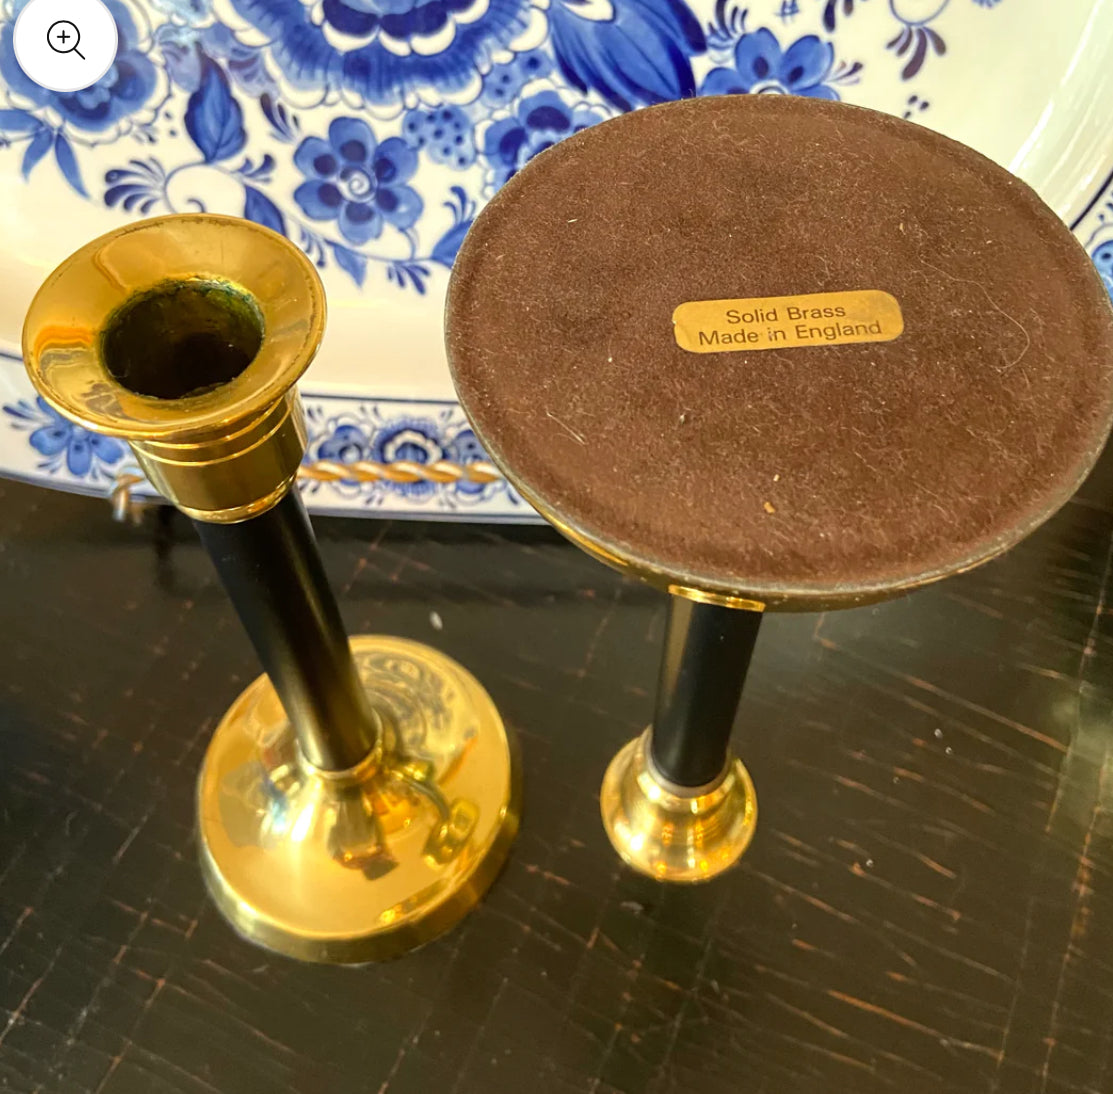 Pair of English shiny brass and ebony black vintage candlestick holders